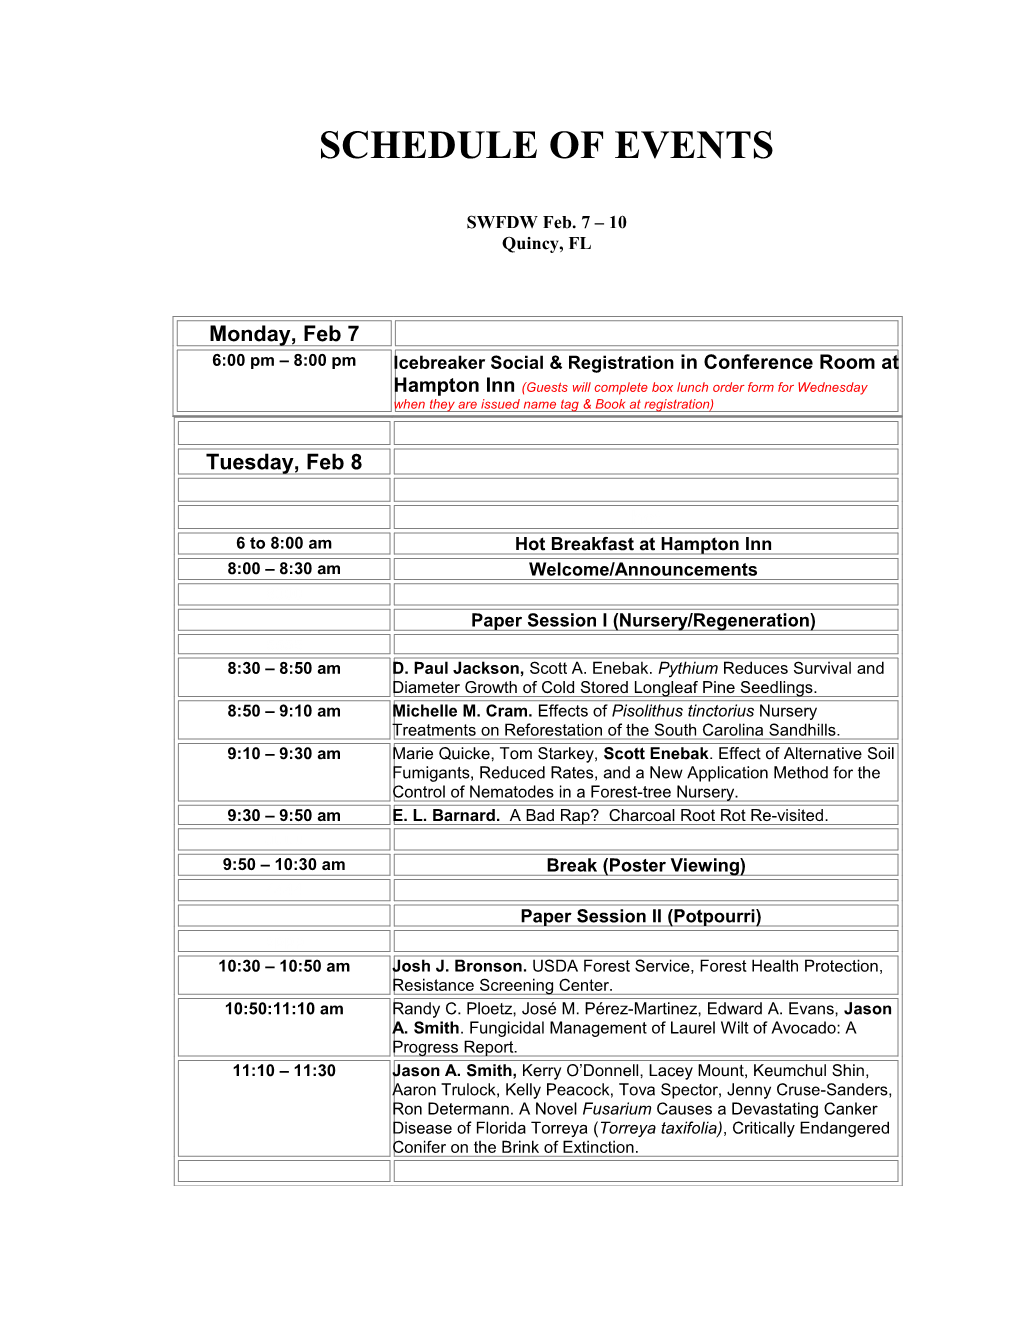 Schedule of Events s1